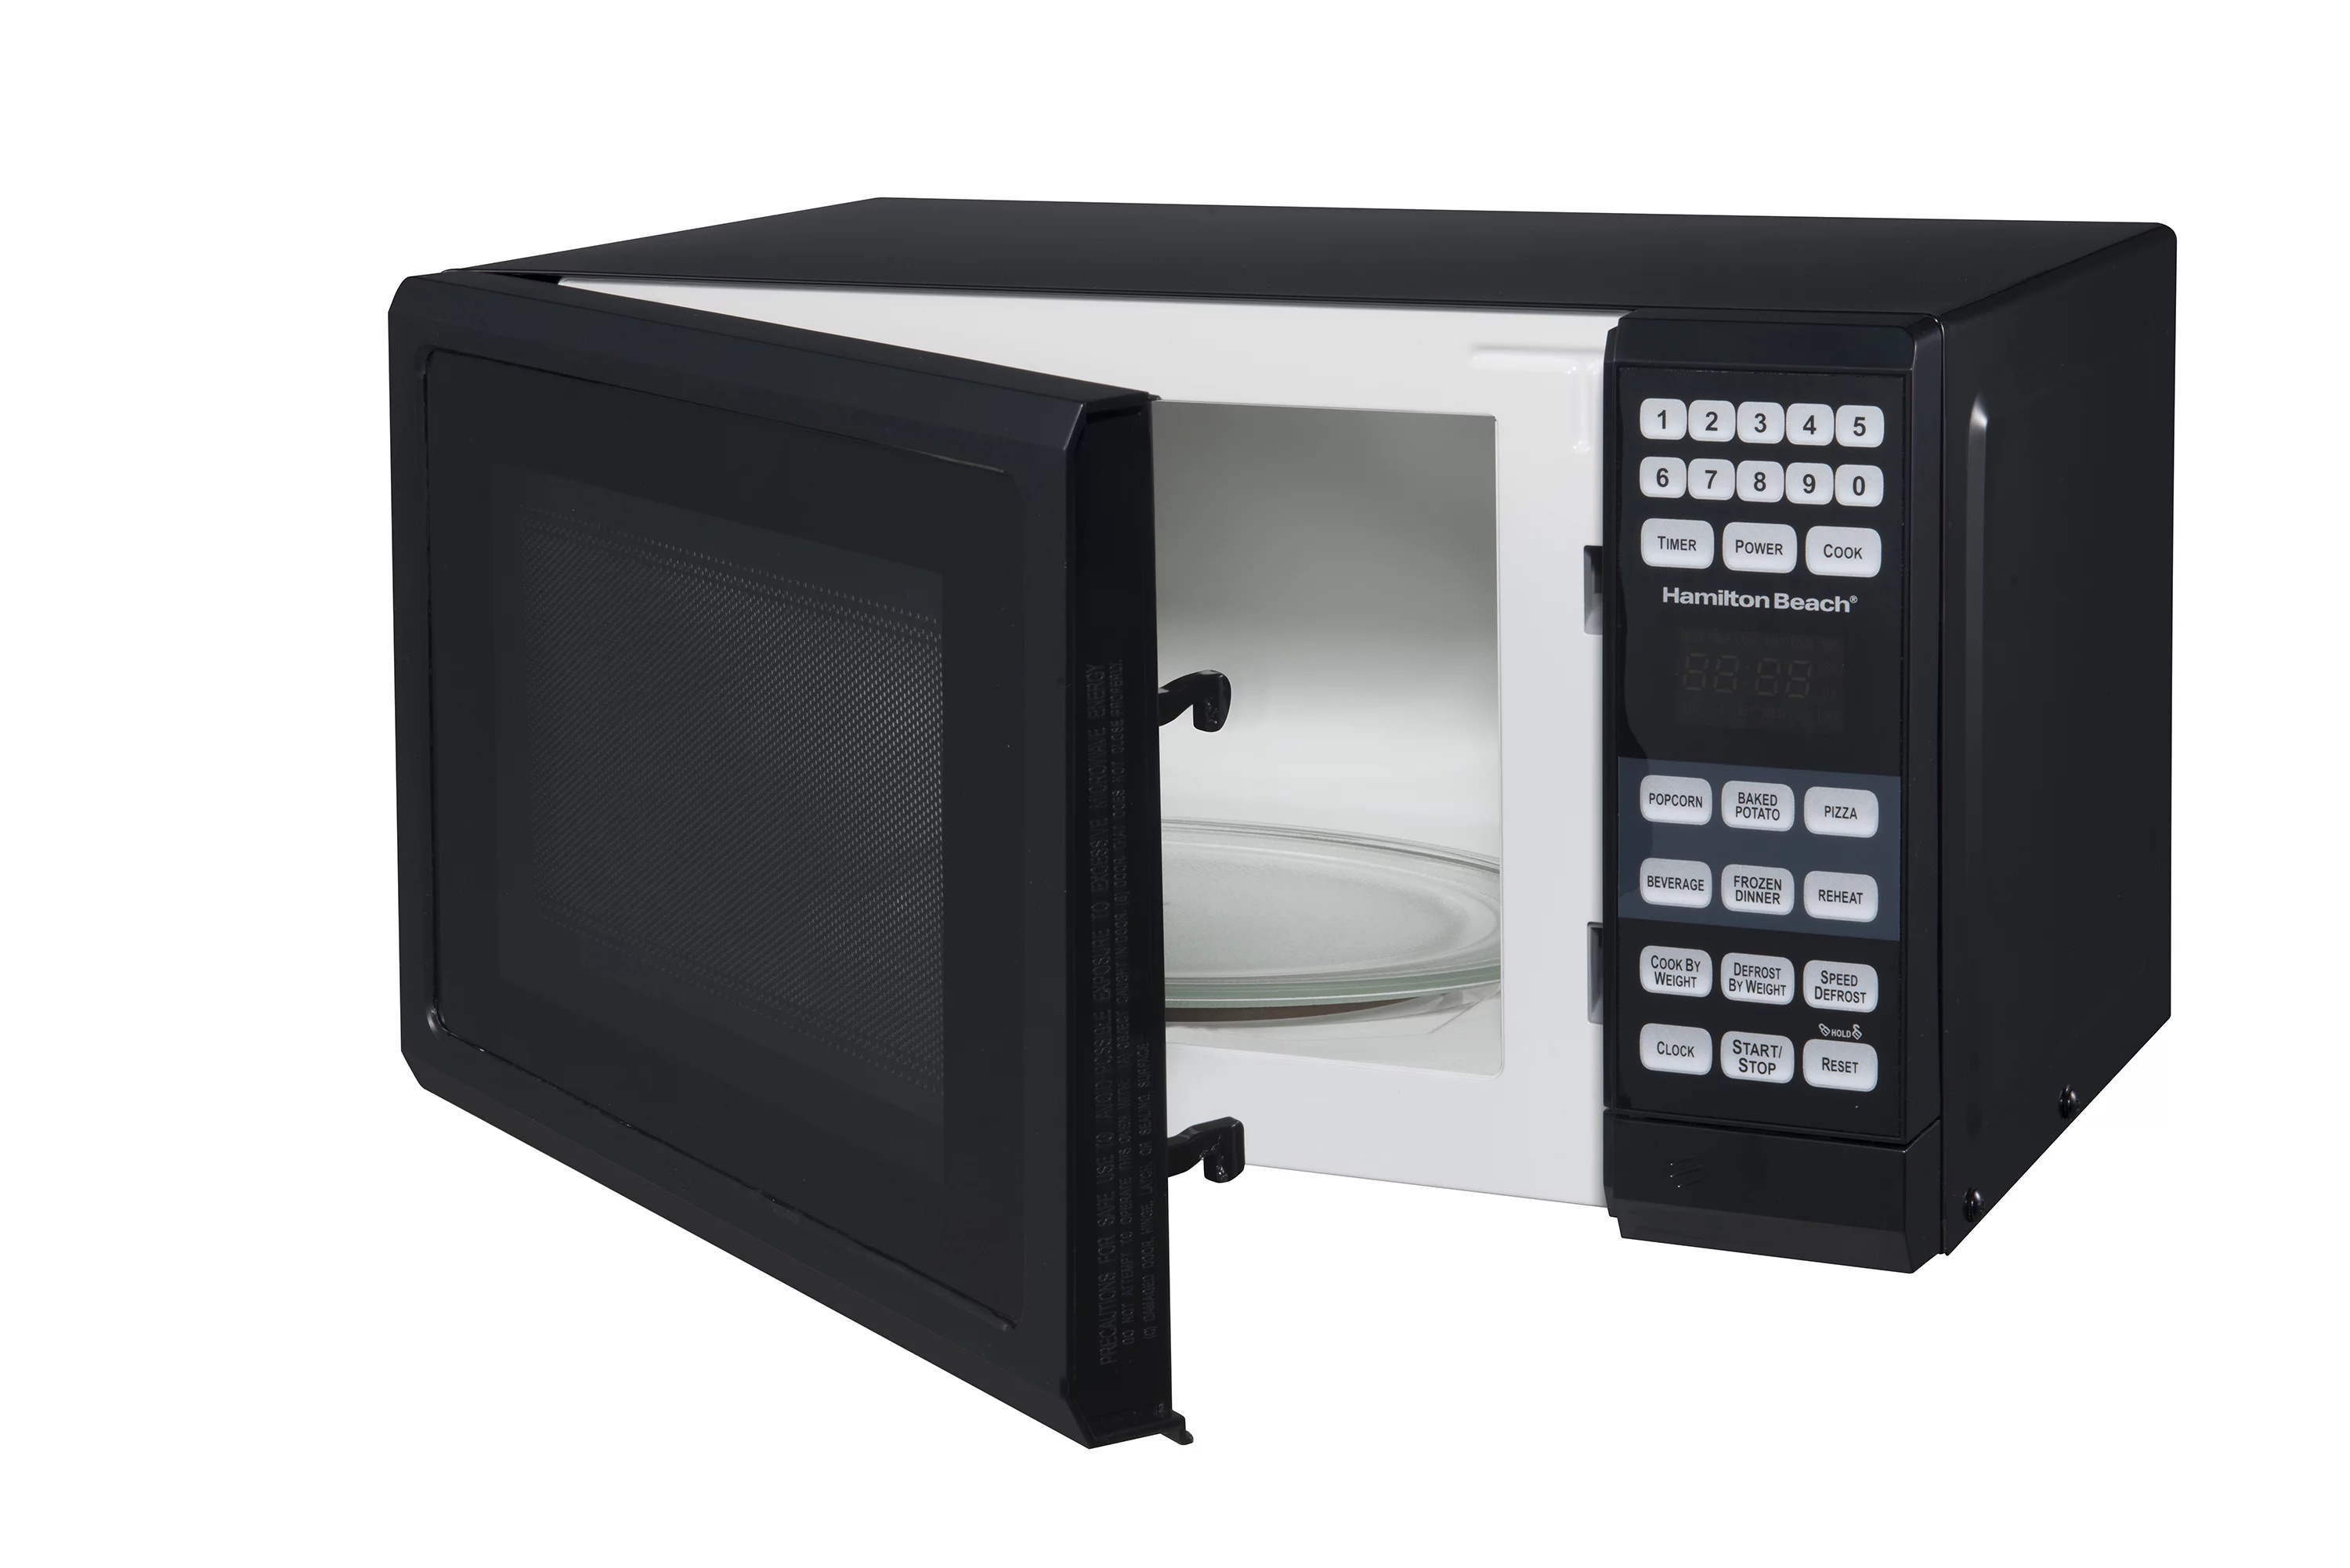 Sunbeam 0.7-cu ft 700-Watt Countertop Microwave (White) at